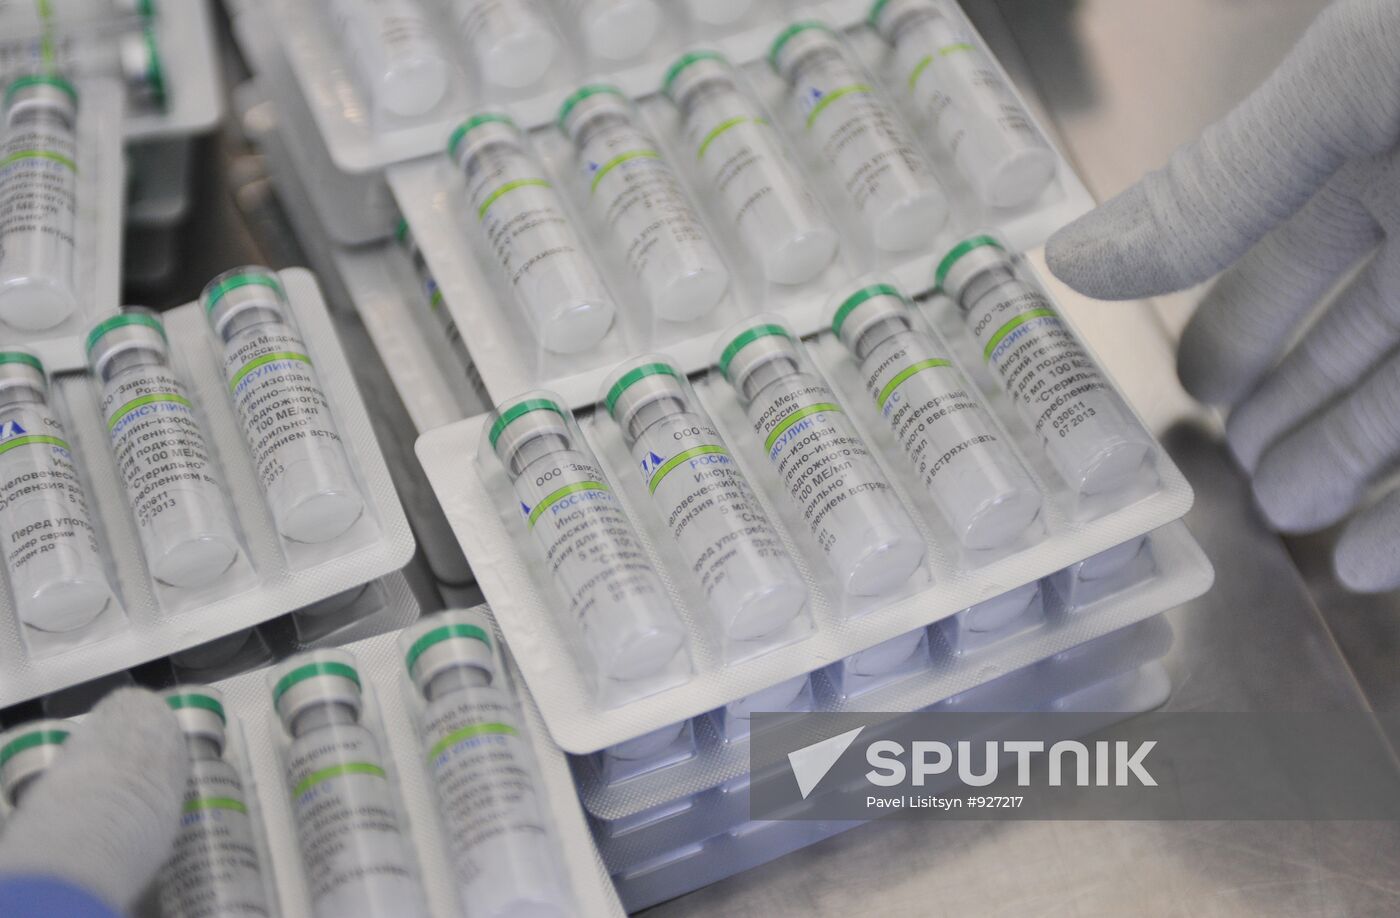 Insulin production line at Medsintez plant